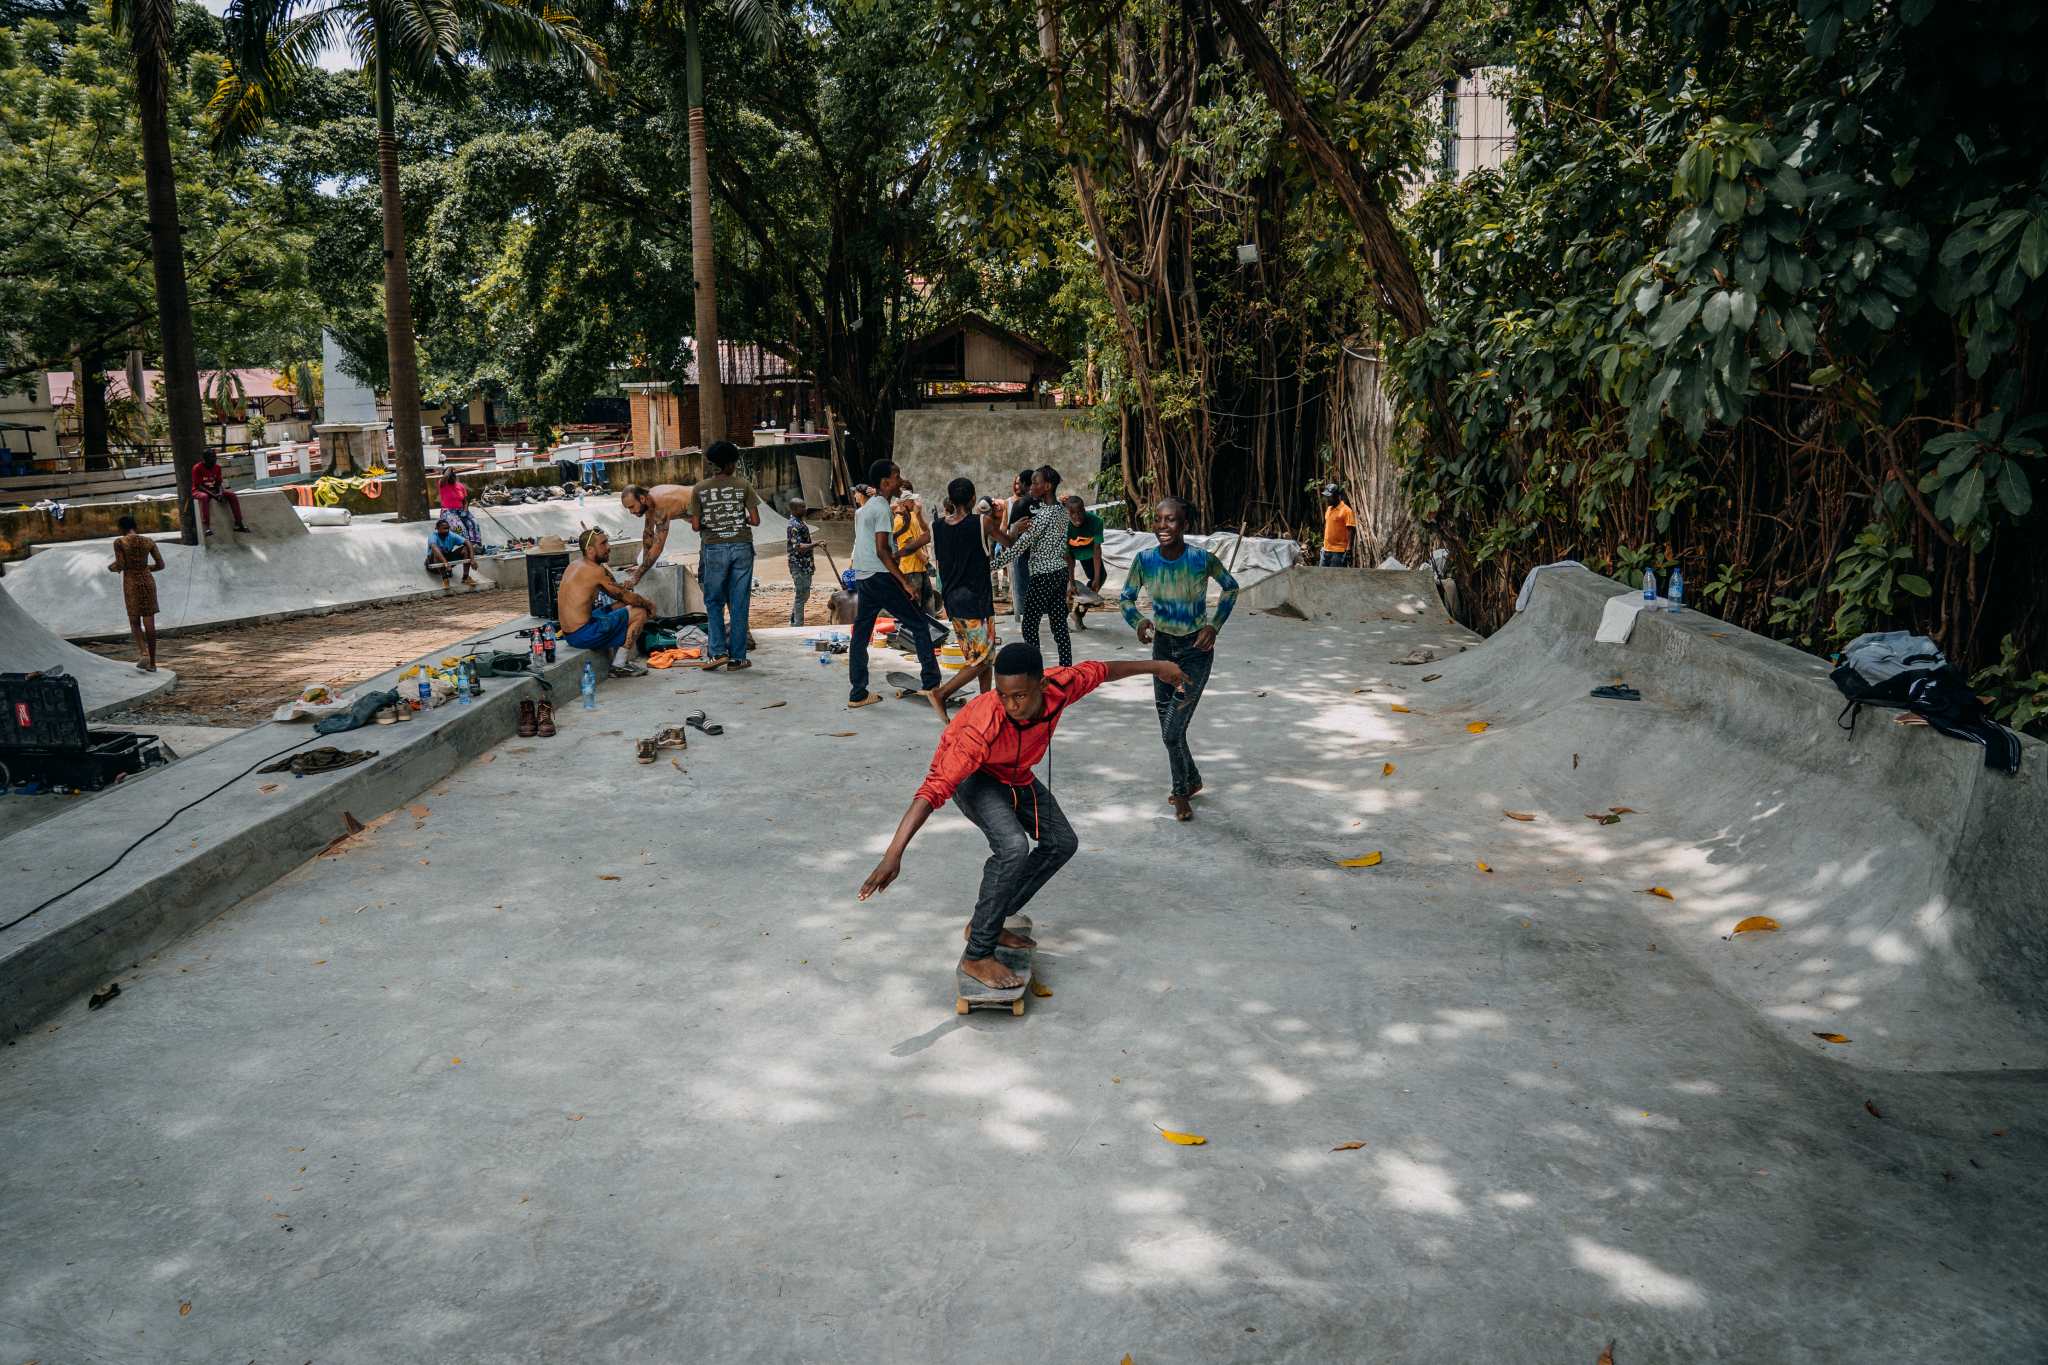 Kids skating at waf. skatepark in Lagos, Nigeria